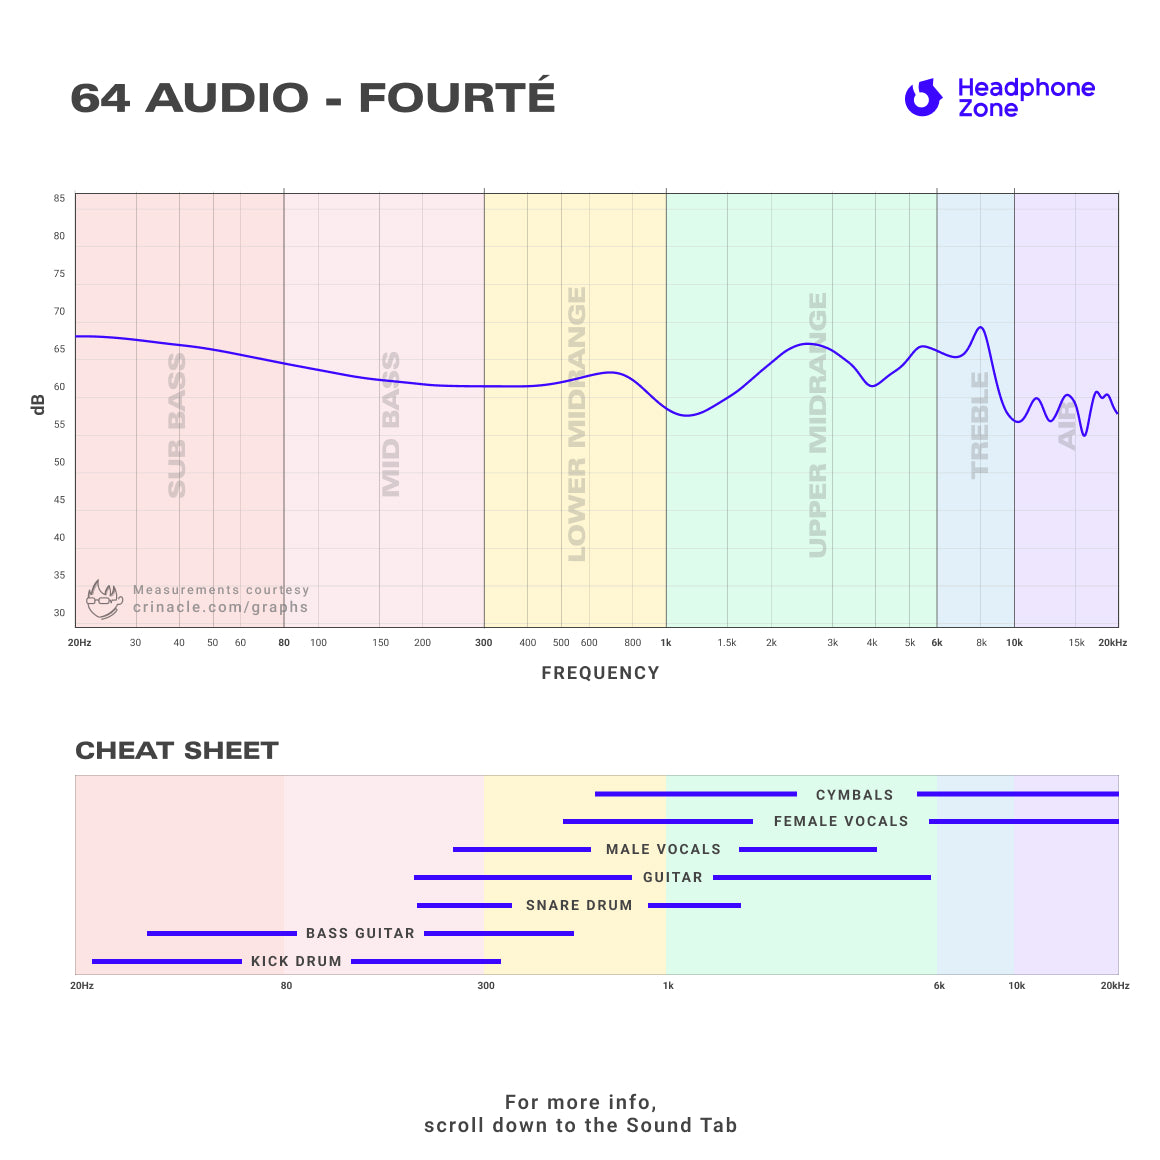 64 Audio - Fourte